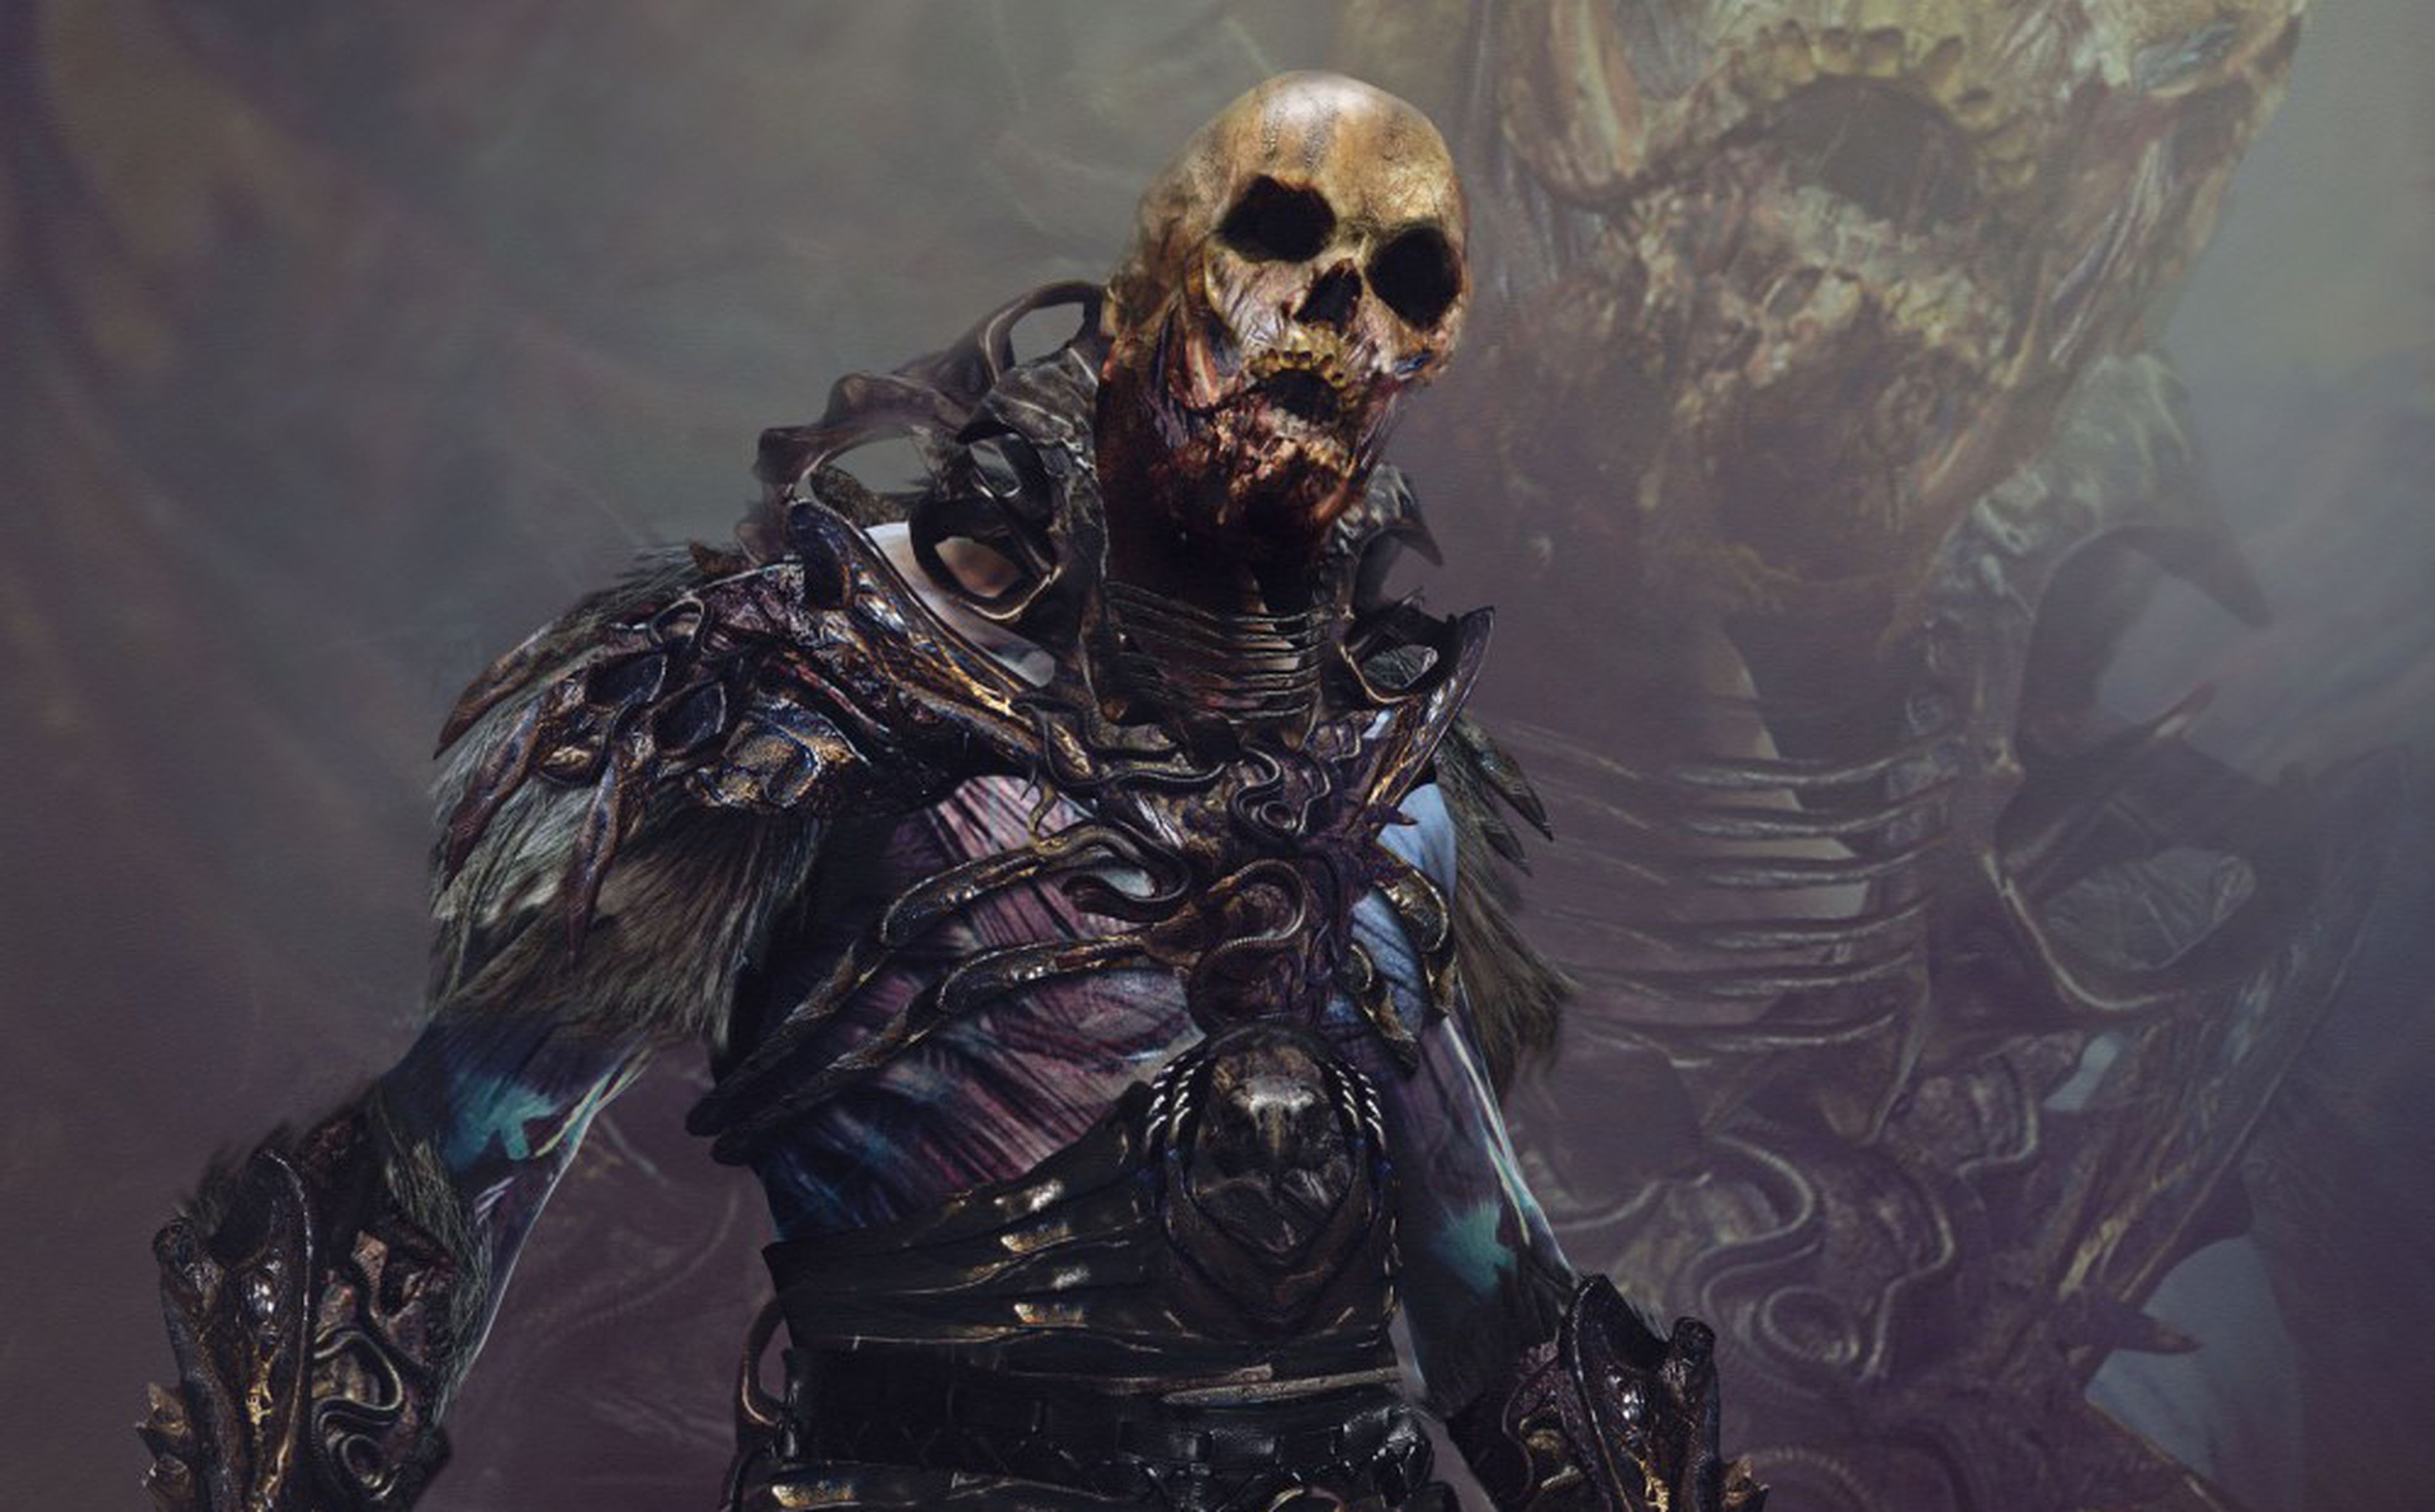 Skeletor concept art